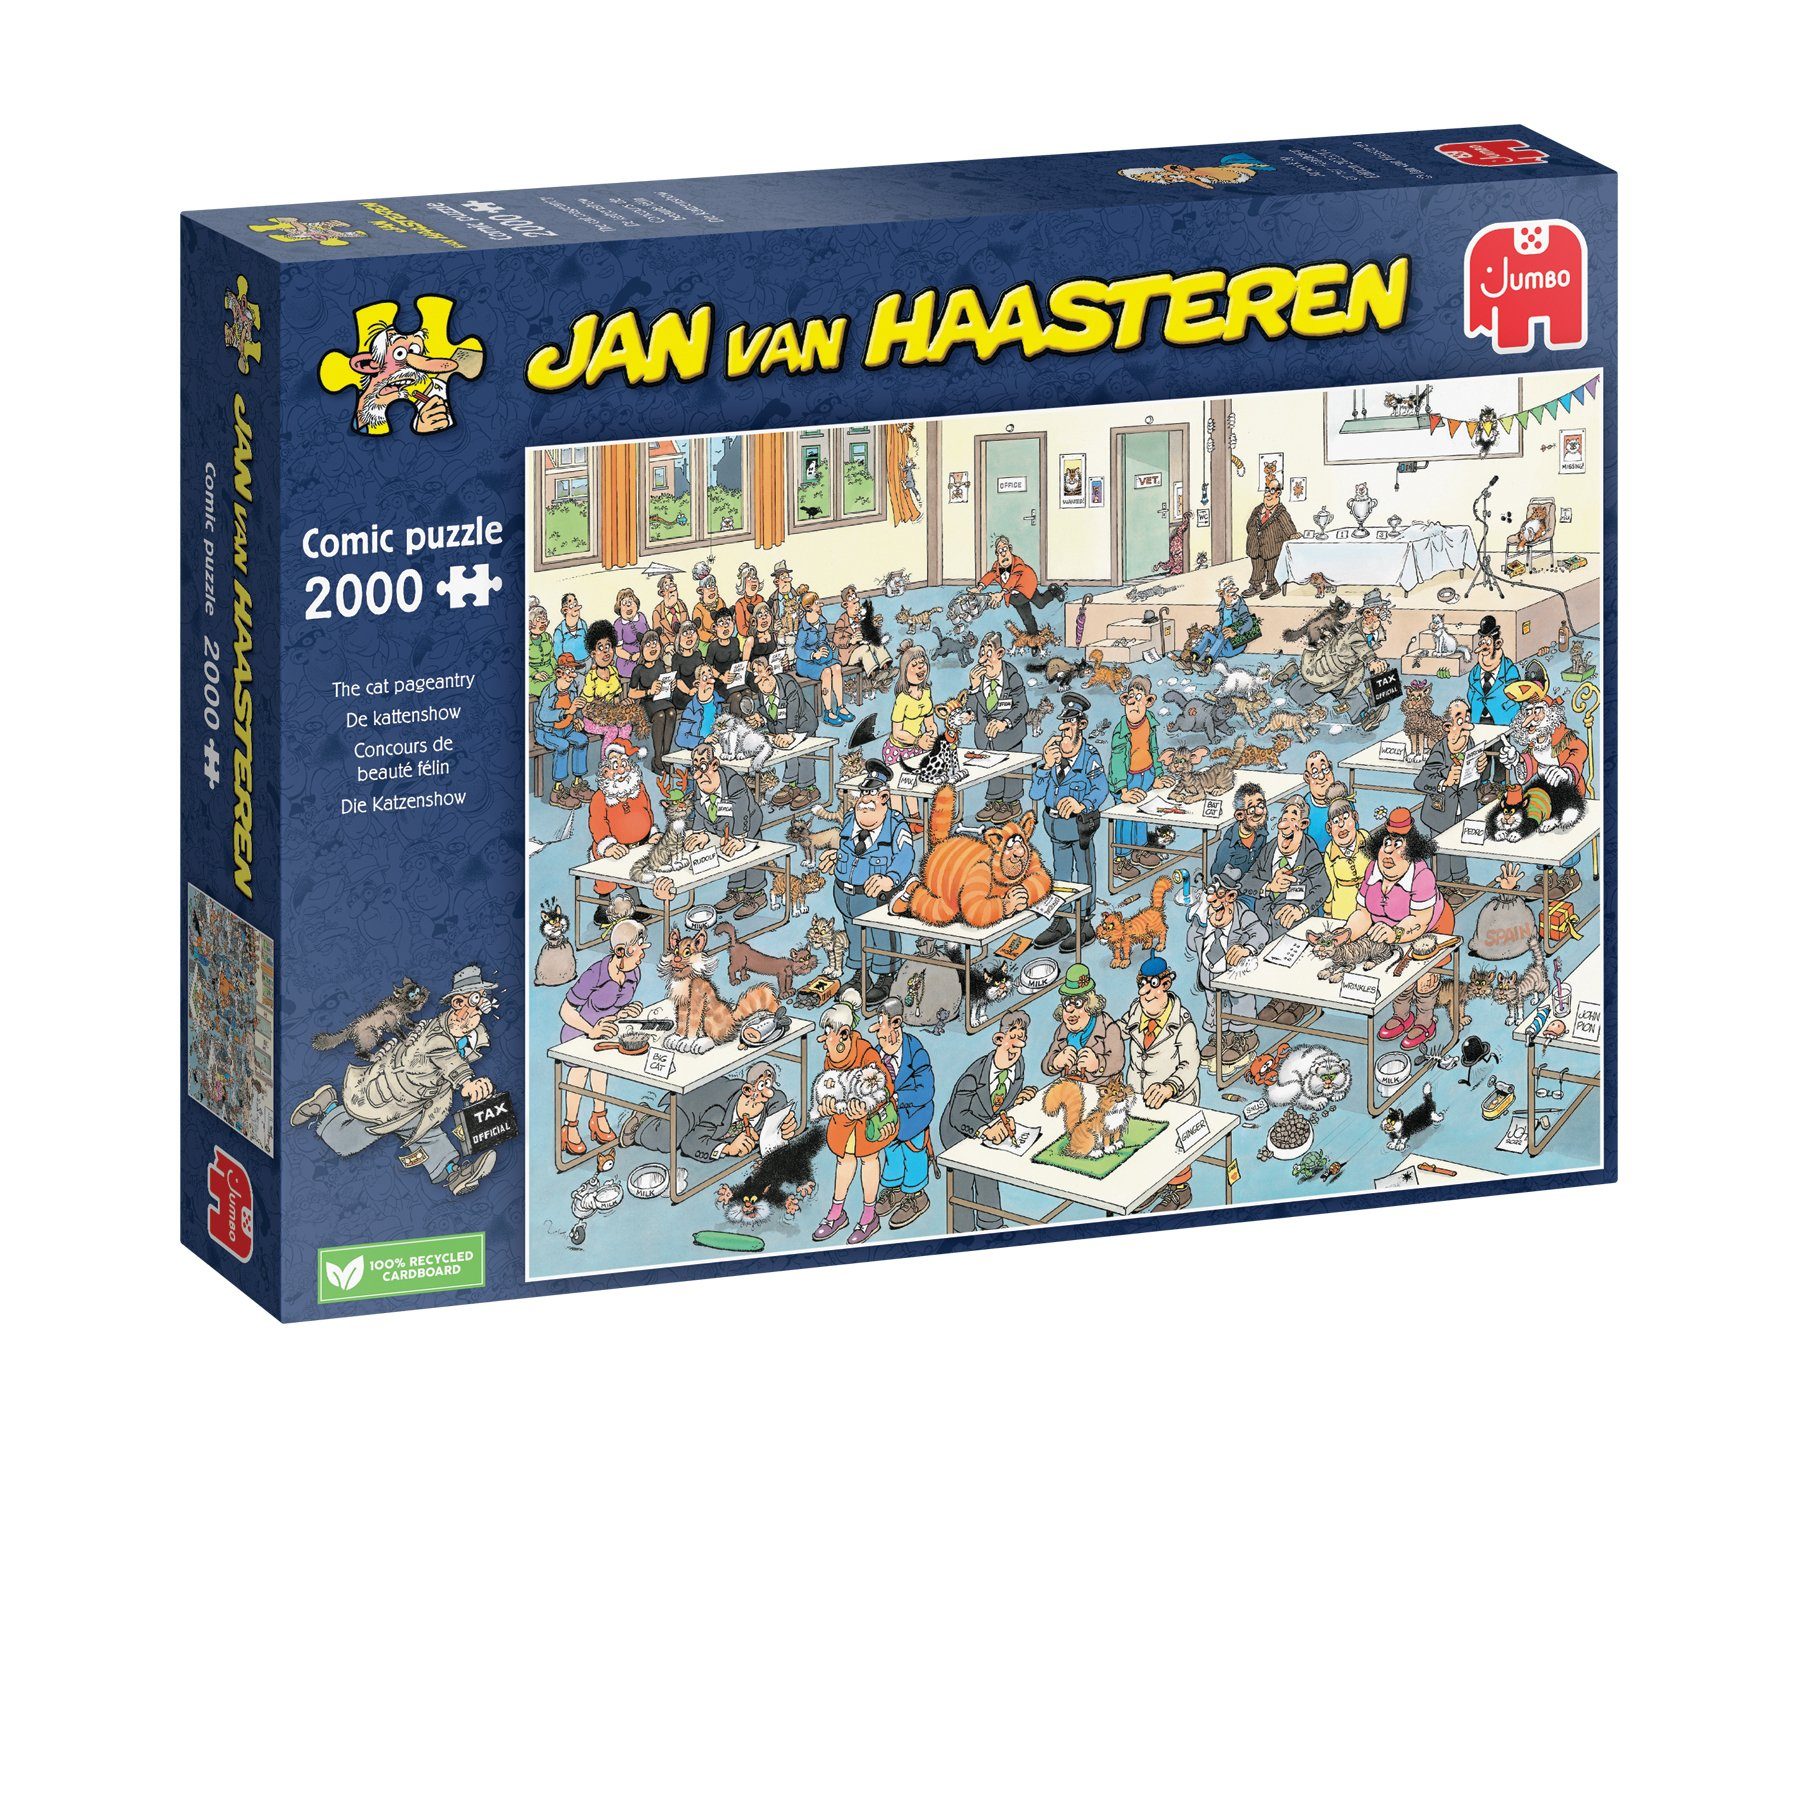 Jumbo Spiele Puzzle 1110100033 Jan van Haasteren Die Katzenshow 2000T, 2000 Puzzleteile | Puzzle